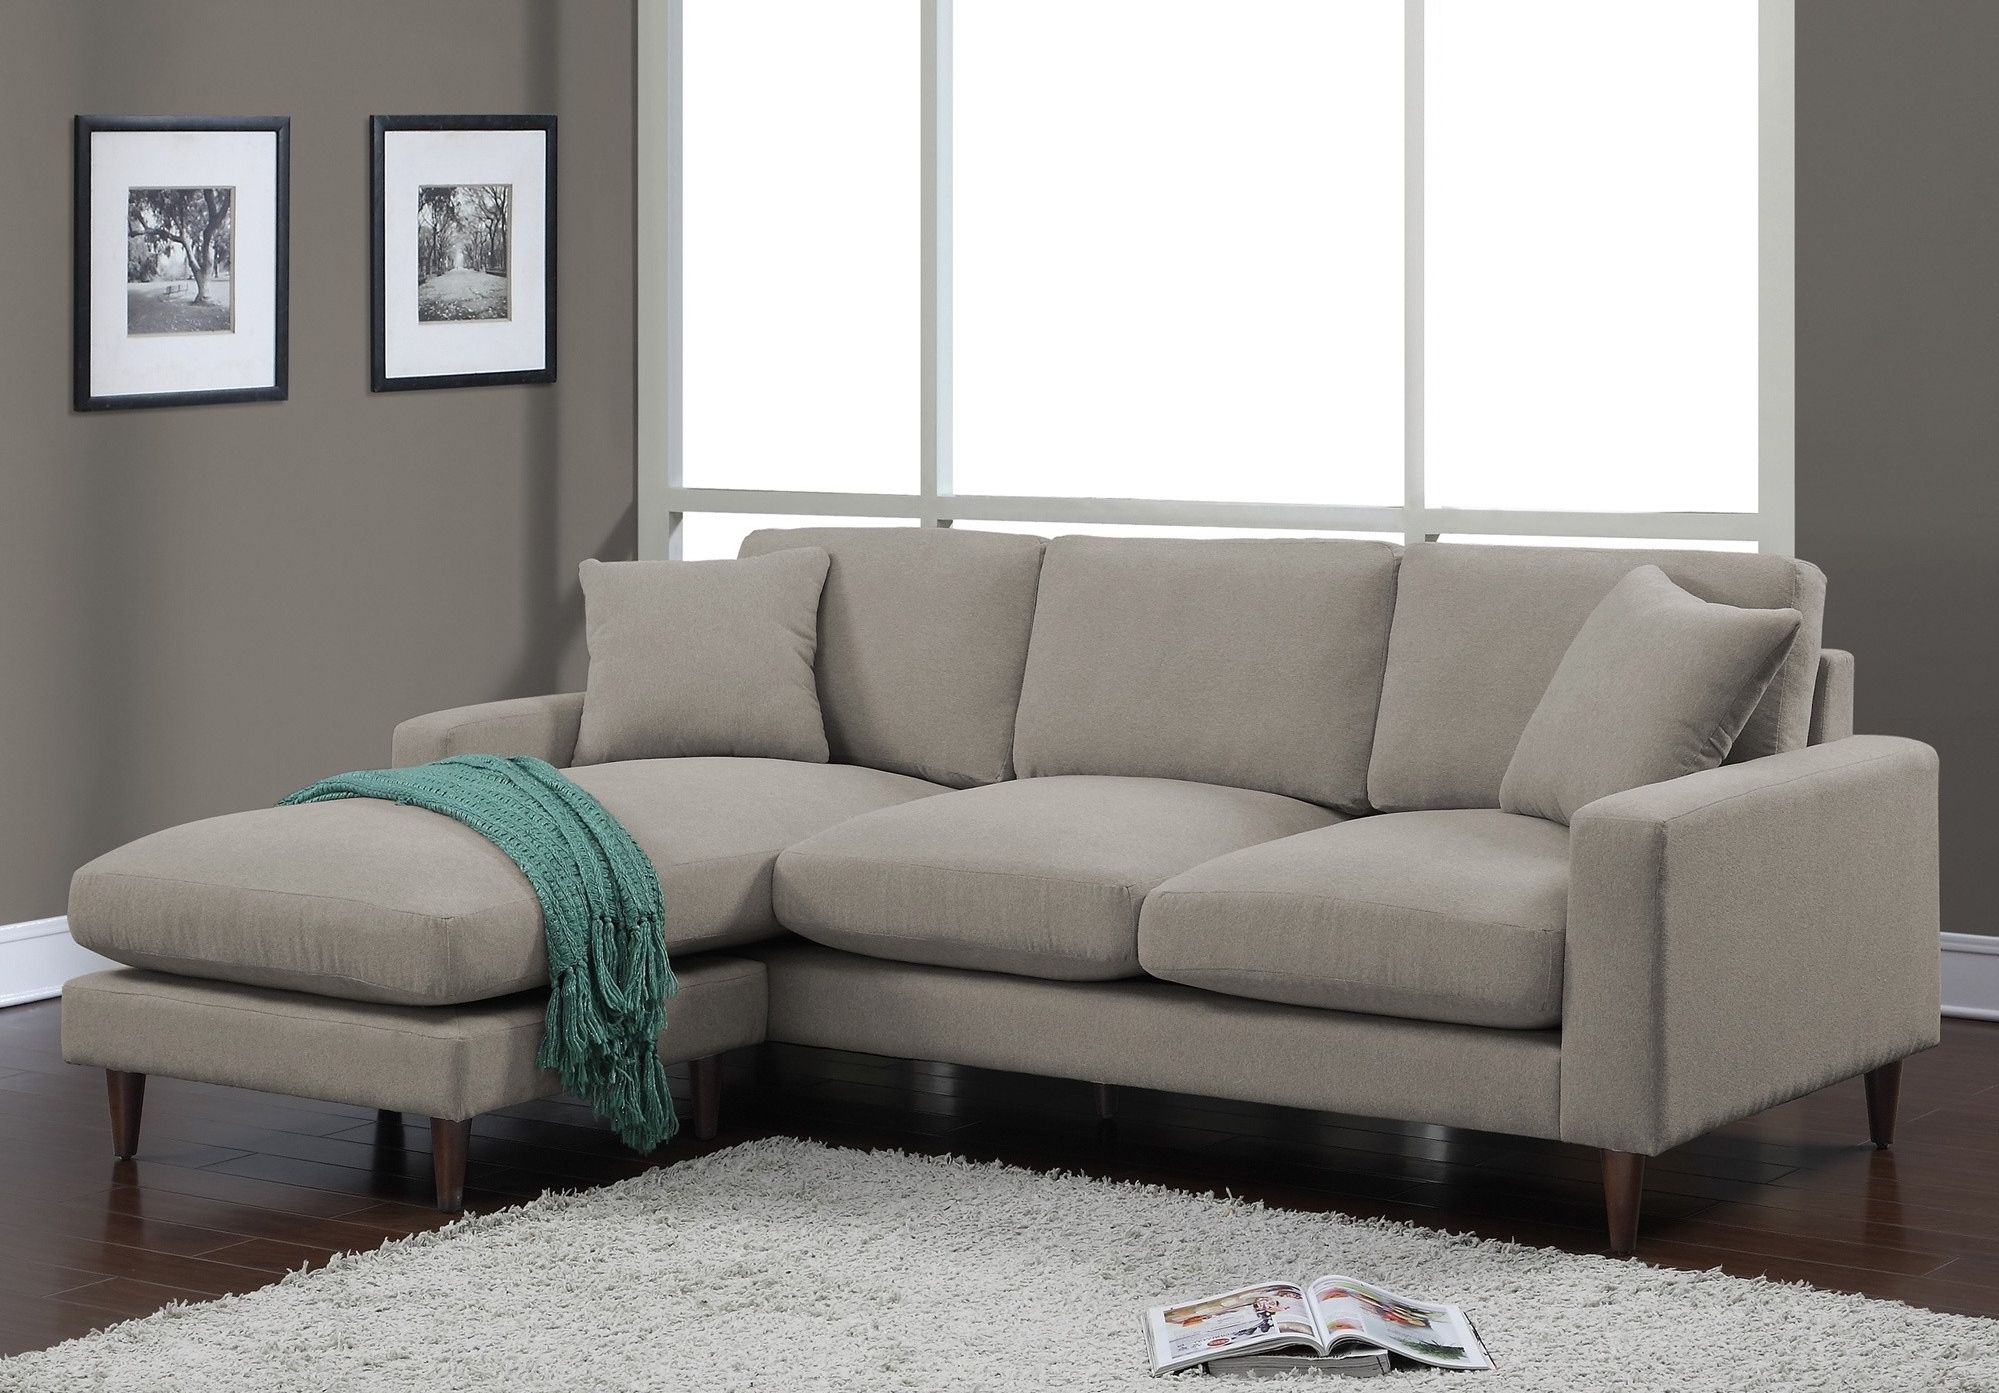 target furniture nz sofa bed